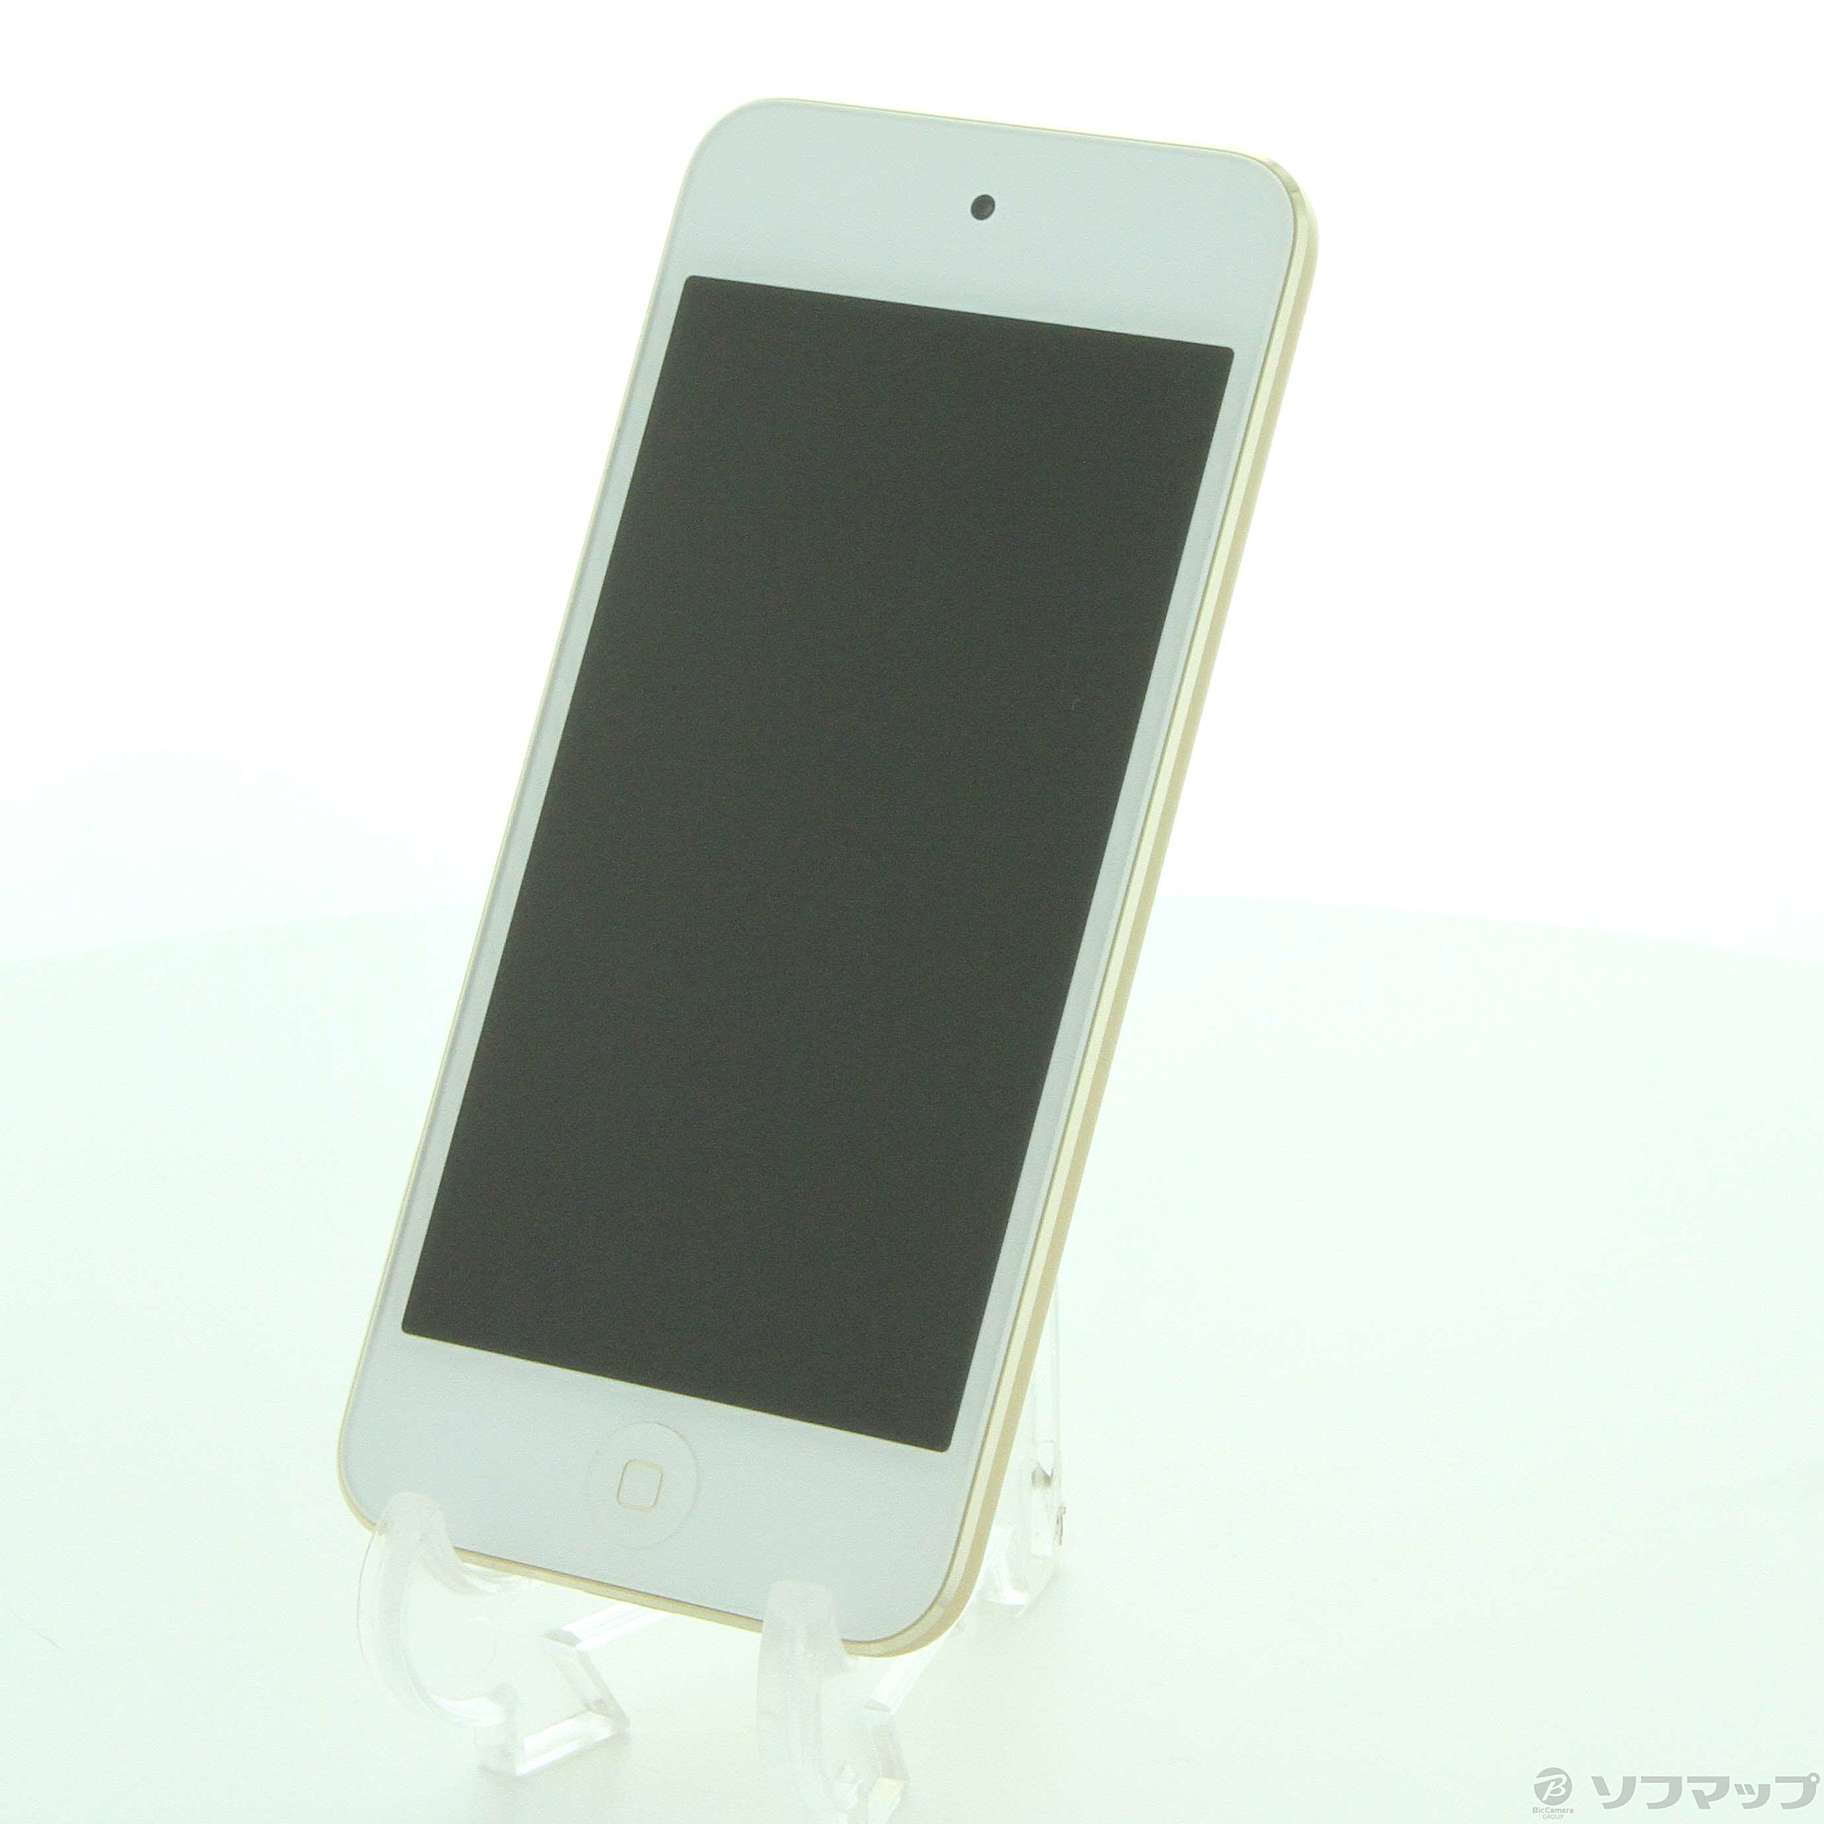 24900円 【57%OFF!】 新品未使用 iPod touch 第7世代128GB